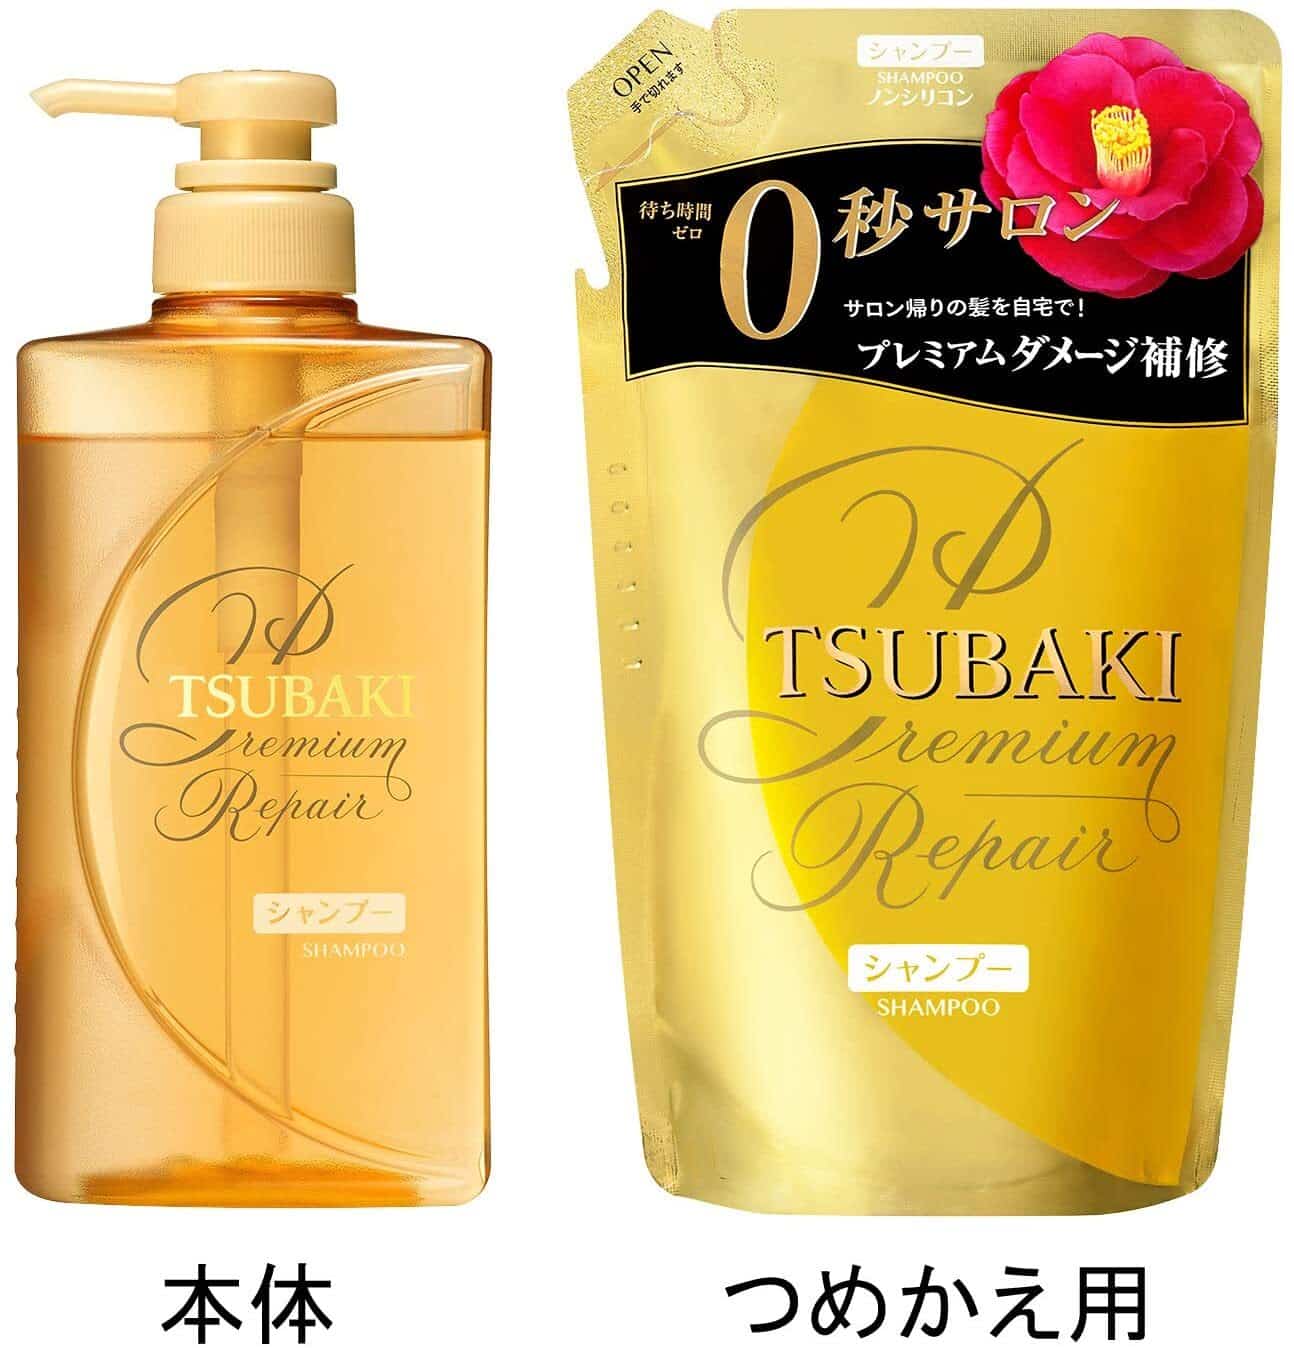 Shiseido TSUBAKI Premium Repair Shampoo Refill 660ml